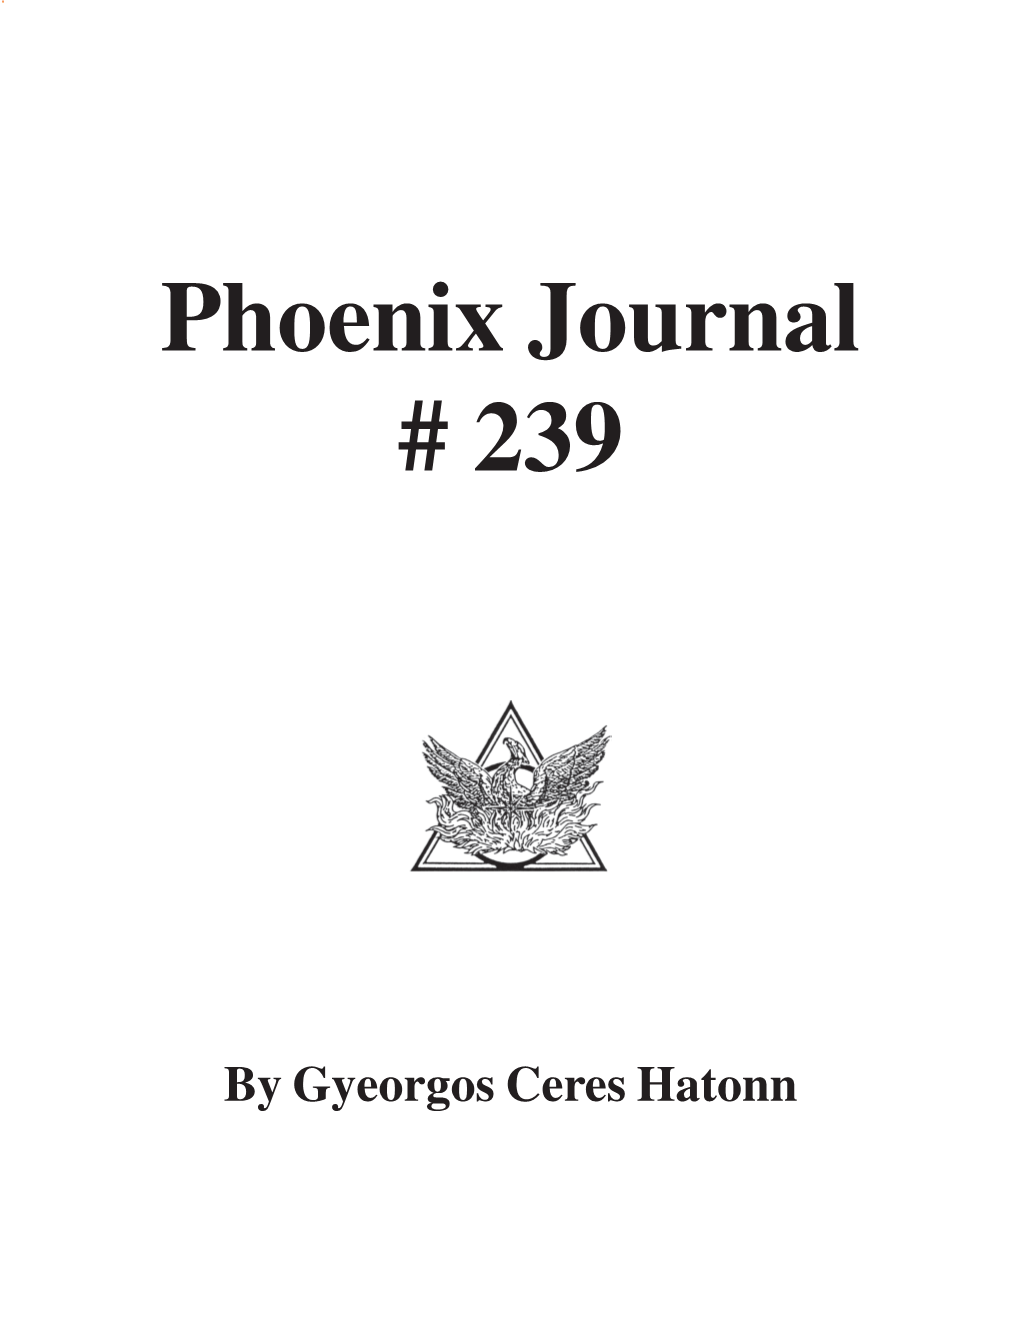 Phoenix Journal # 239